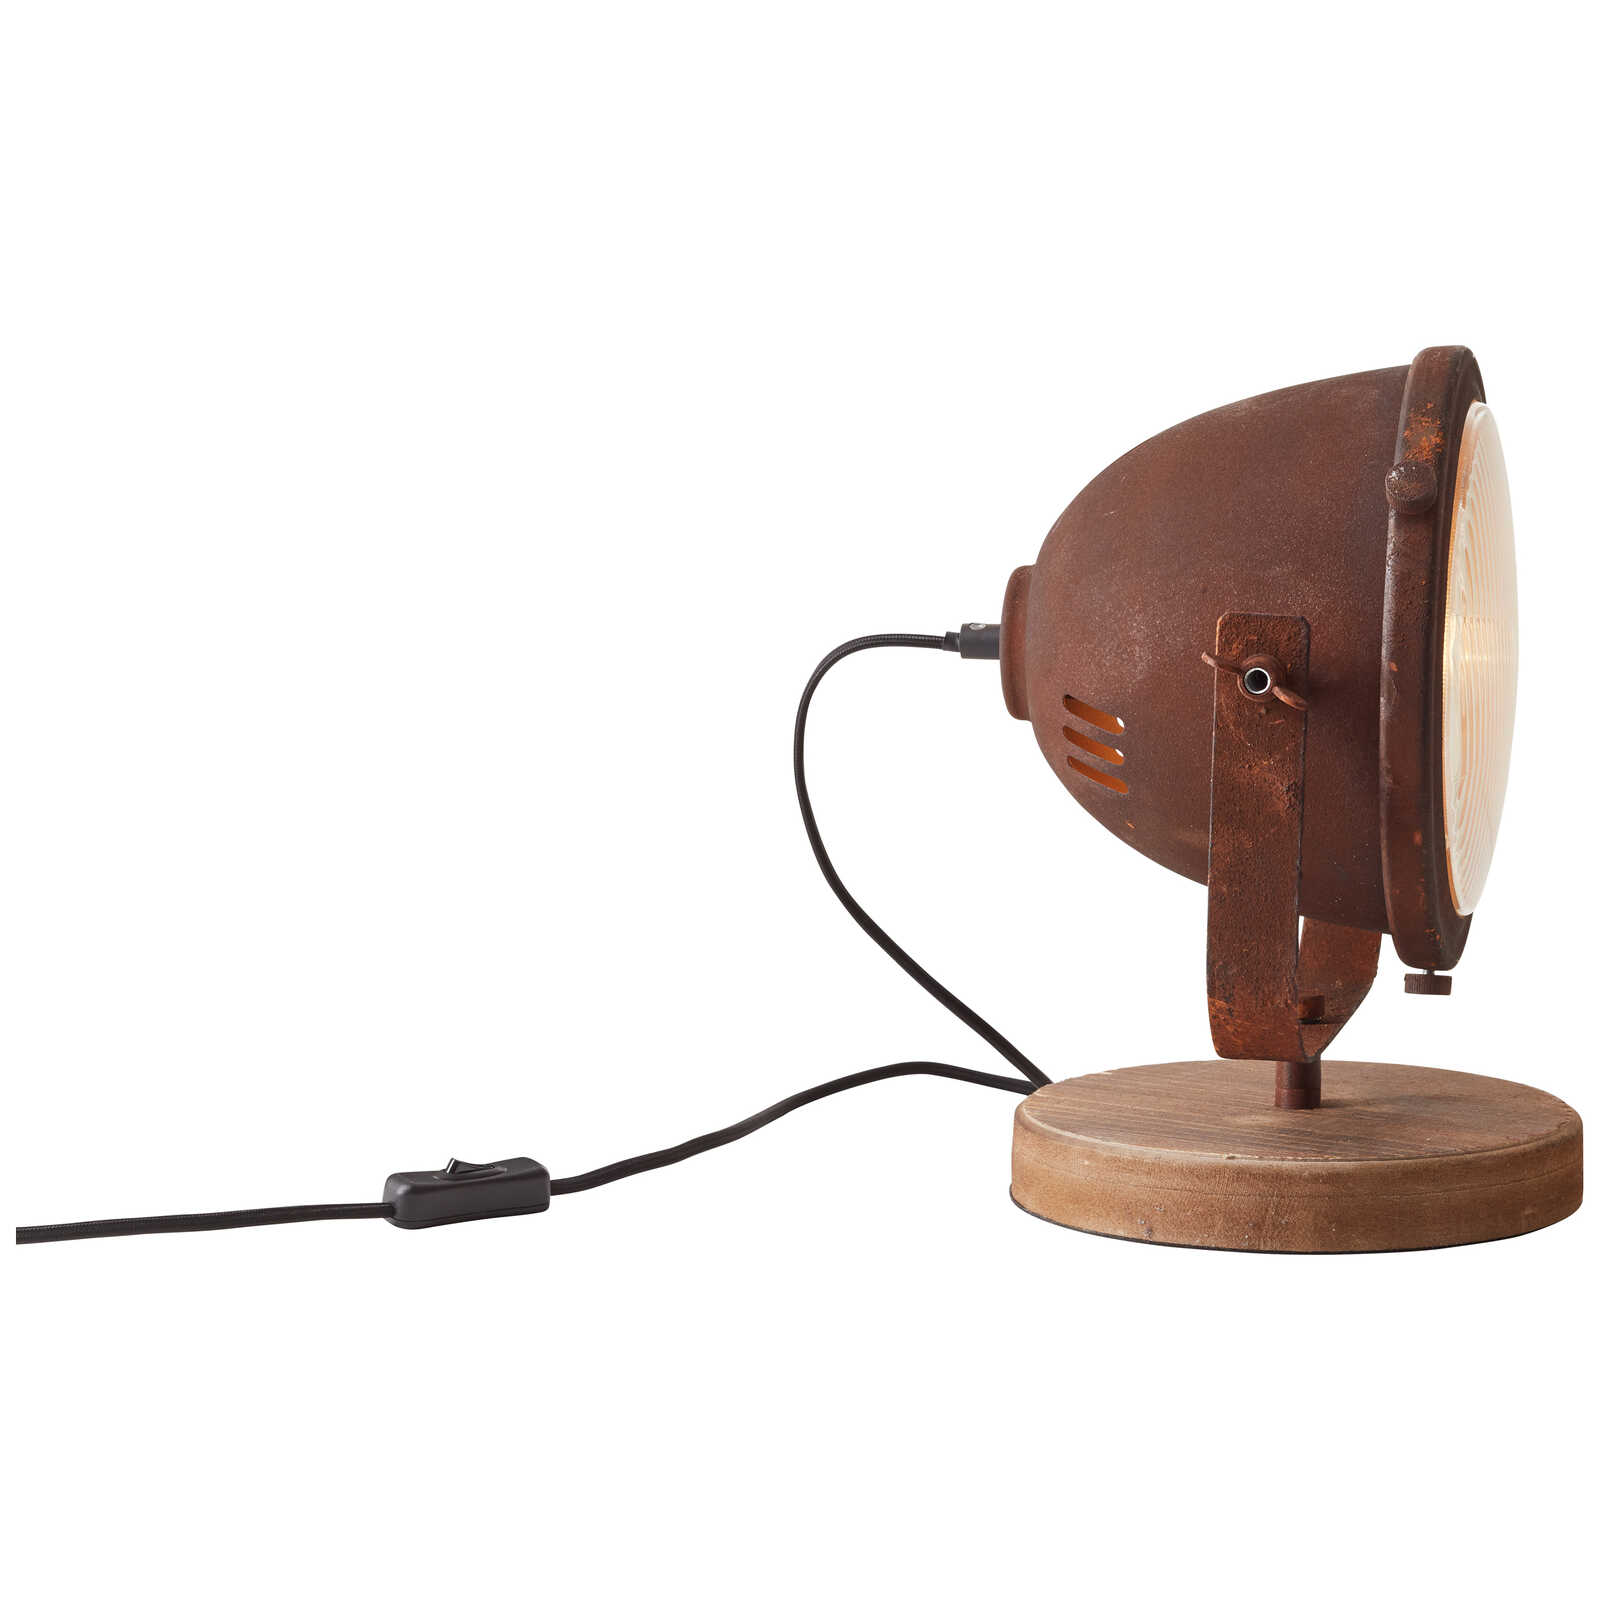             Lámpara de mesa de madera - Dilara 1 - Marrón
        